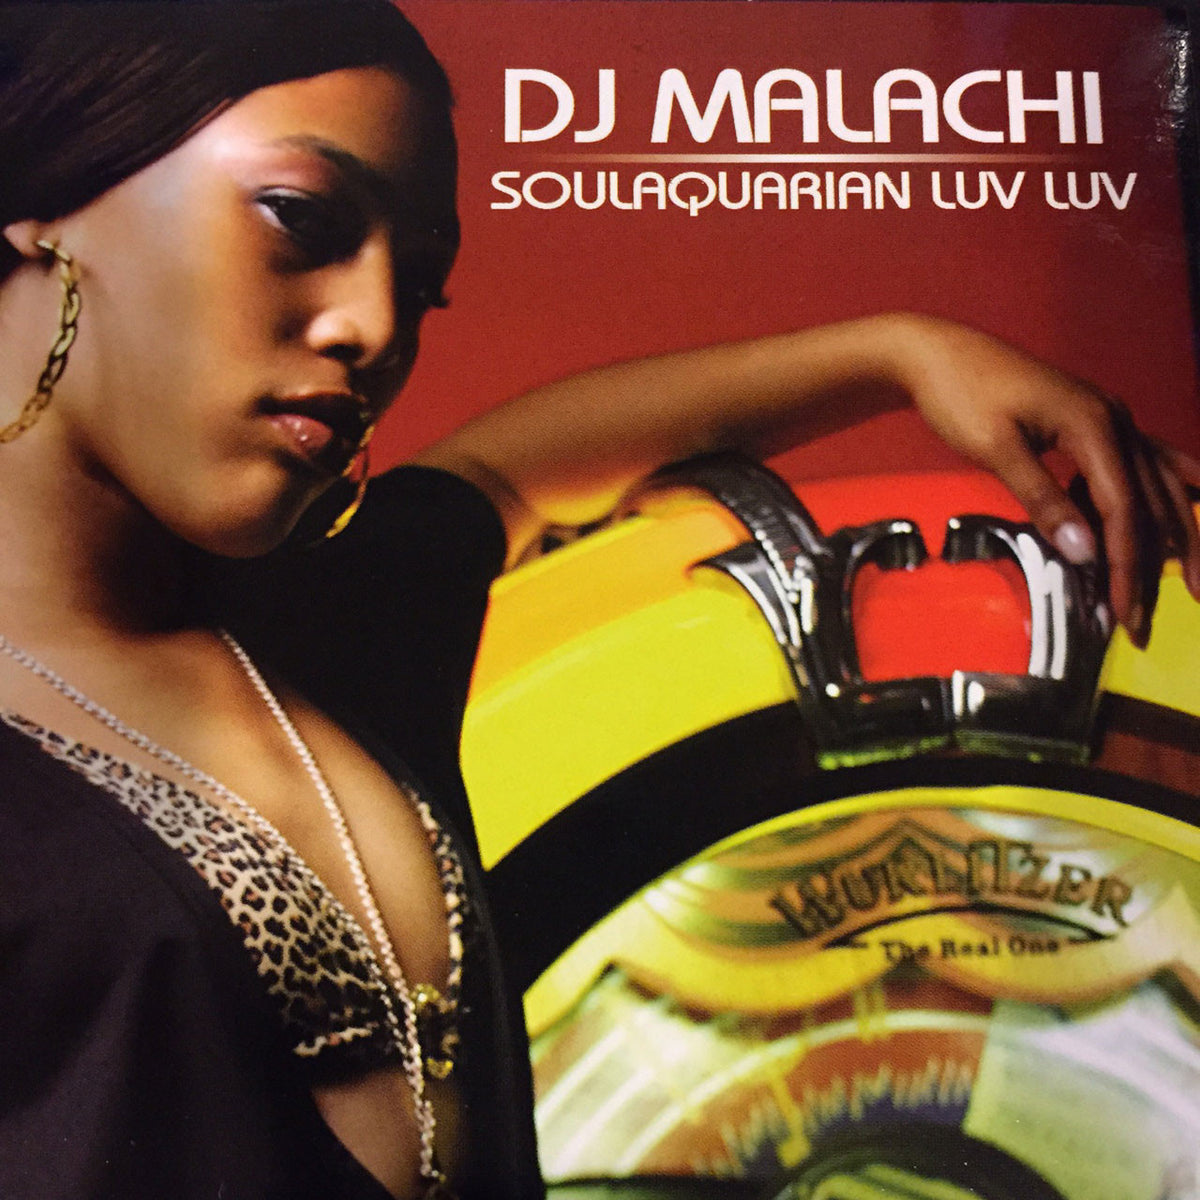 DJ Malachi - Soulaquarian Luv Luv, (2 Disc) Mixed CD - The Giant Peach